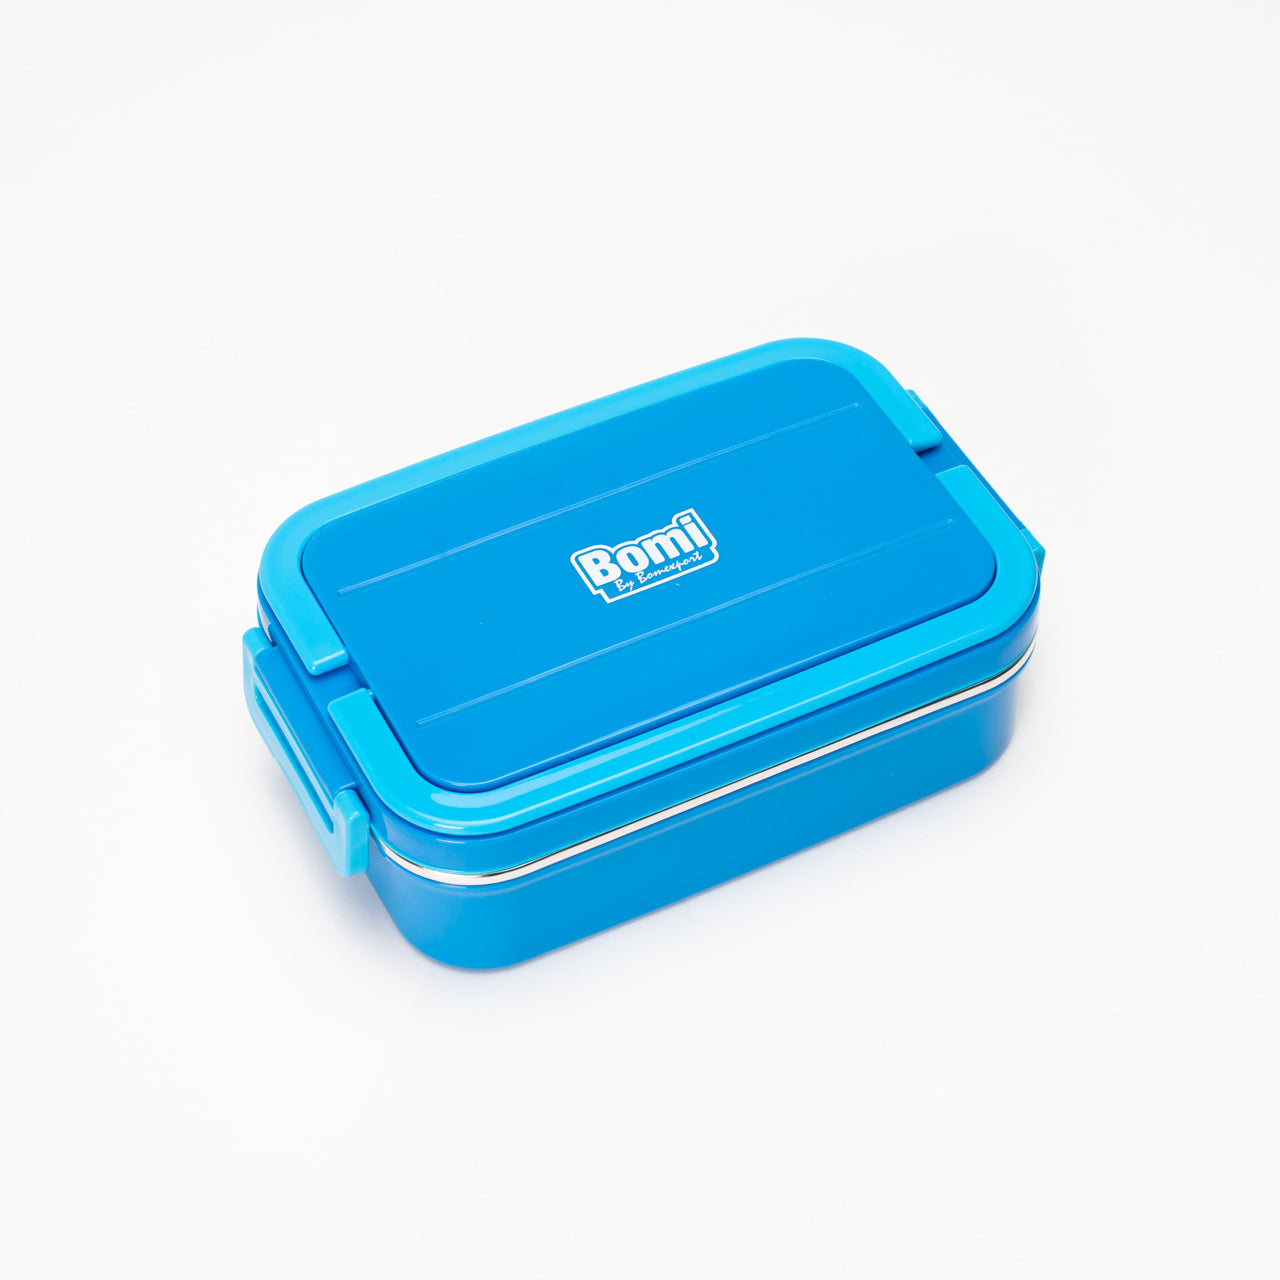 LUNCH BOX BOMI LB05-01-BLUE